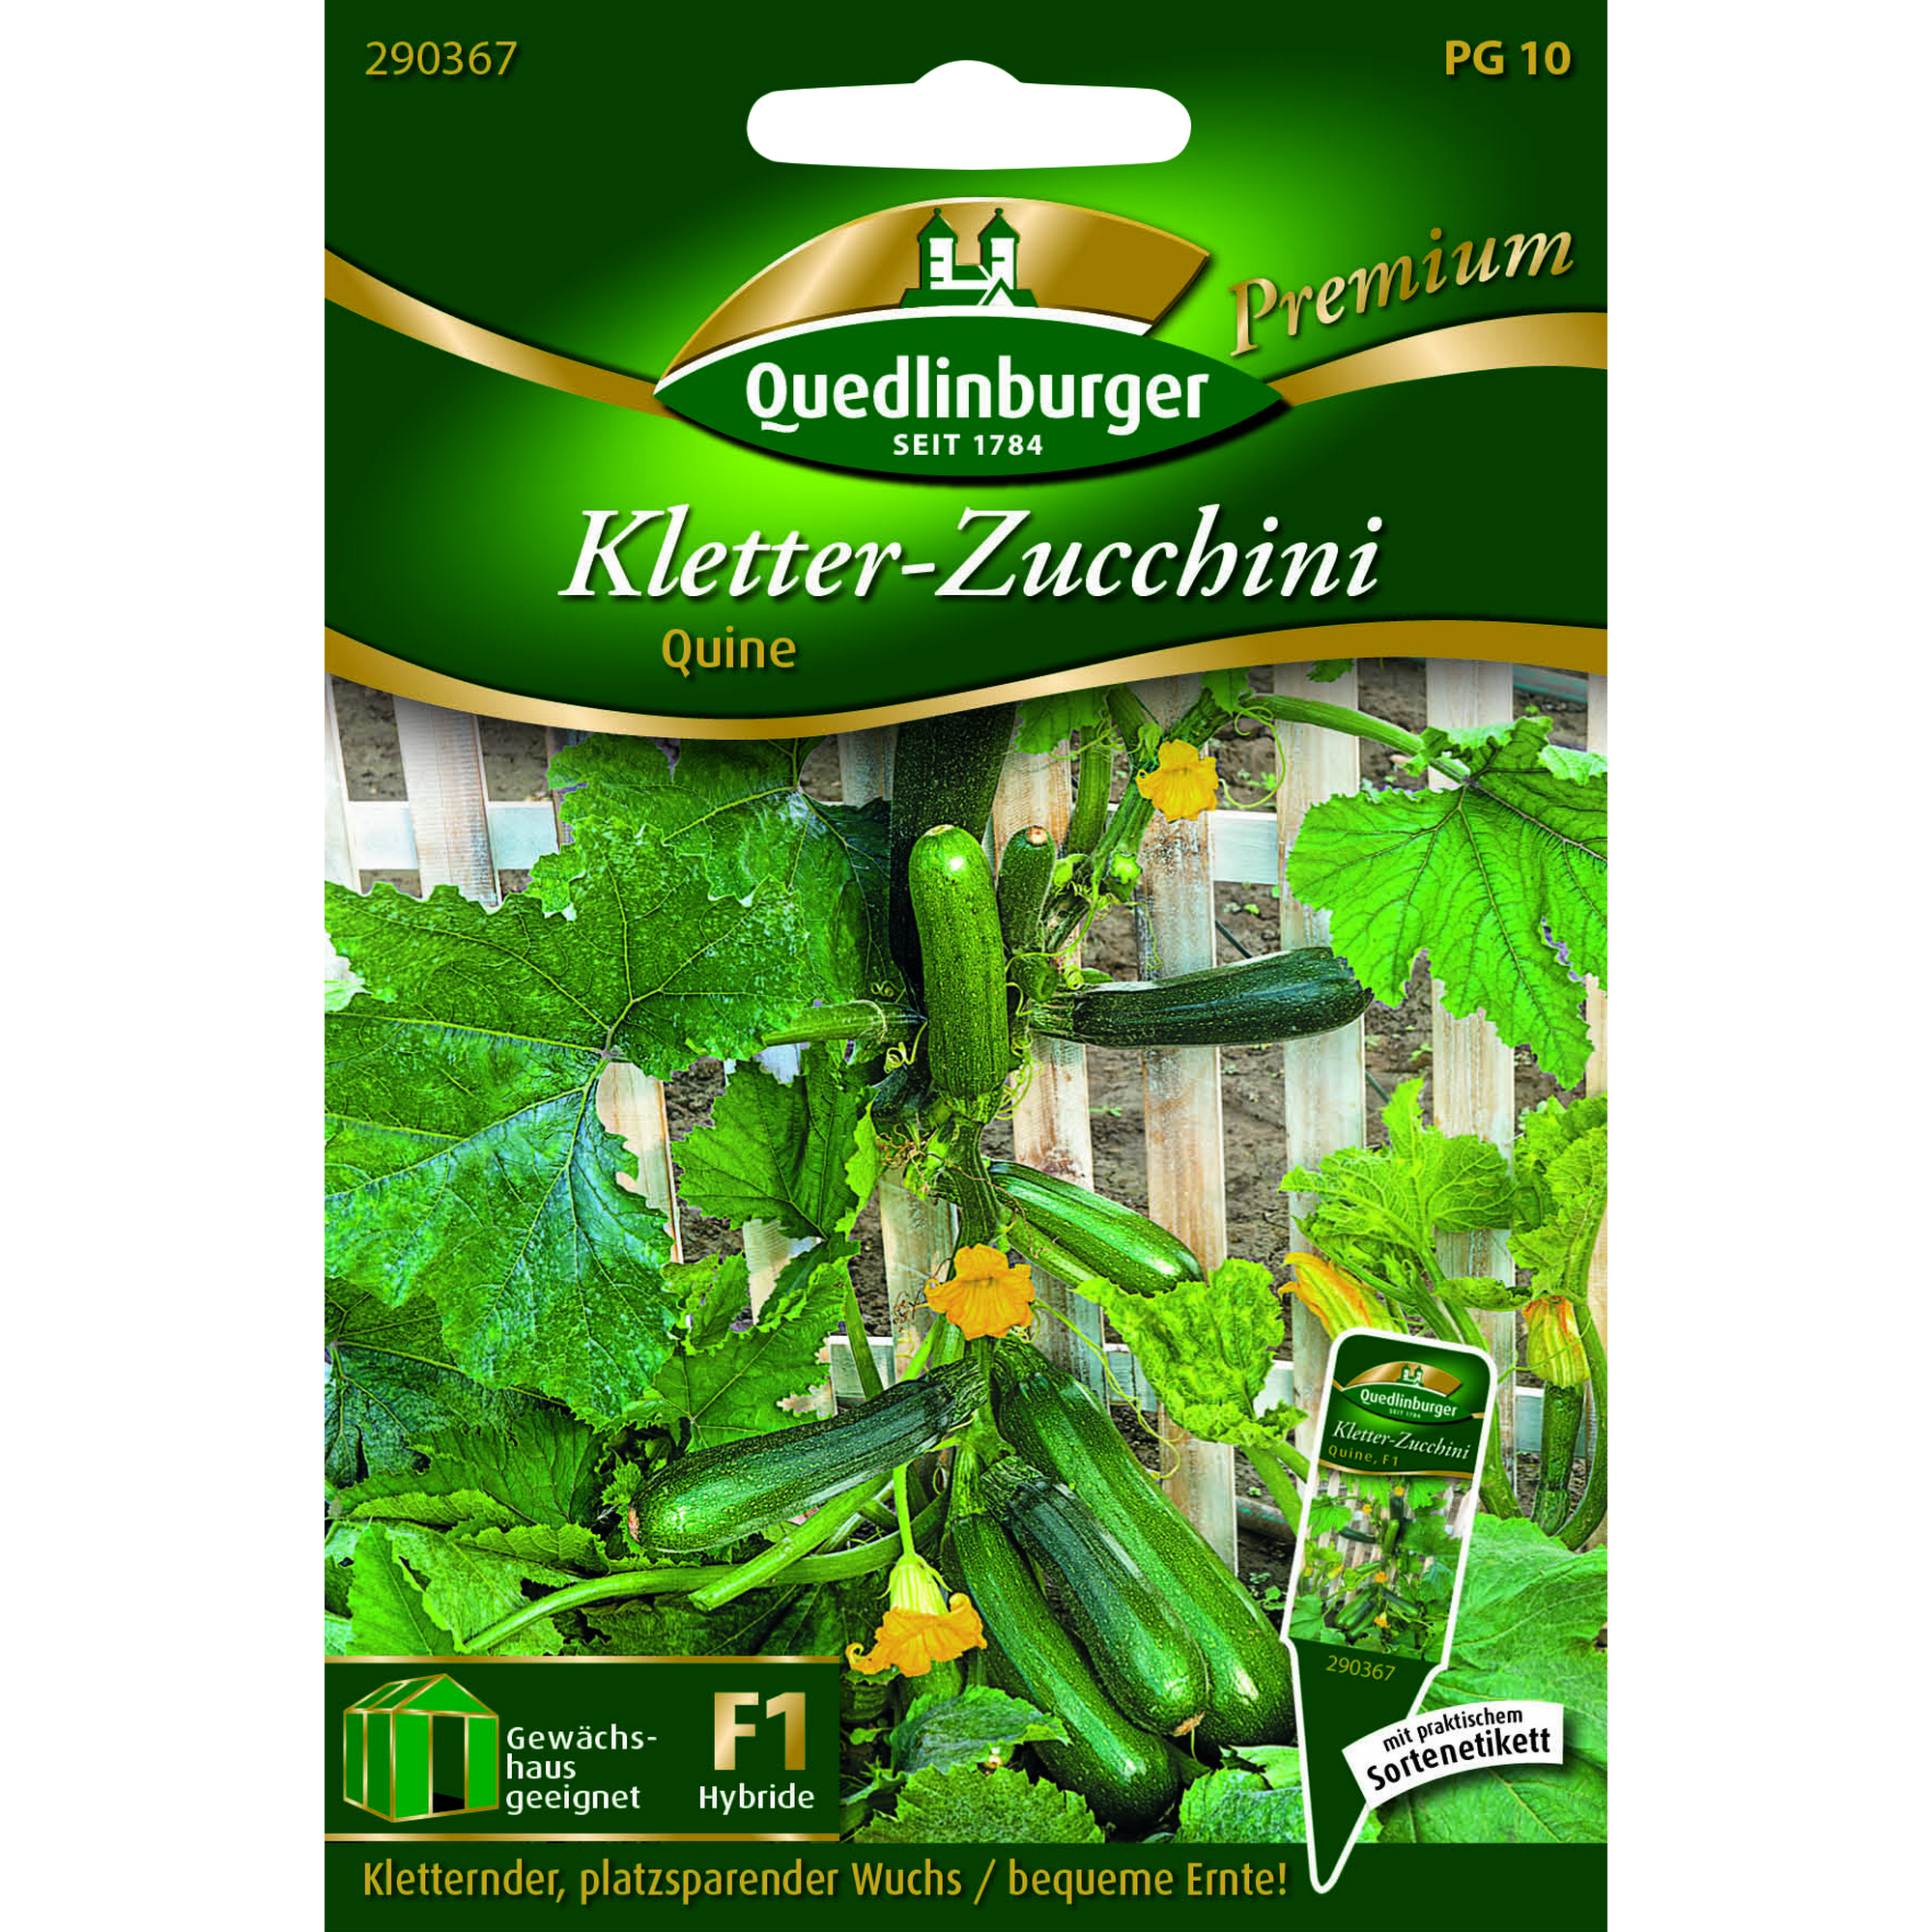 Premium Kletter-Zucchini 'Quine' + product picture